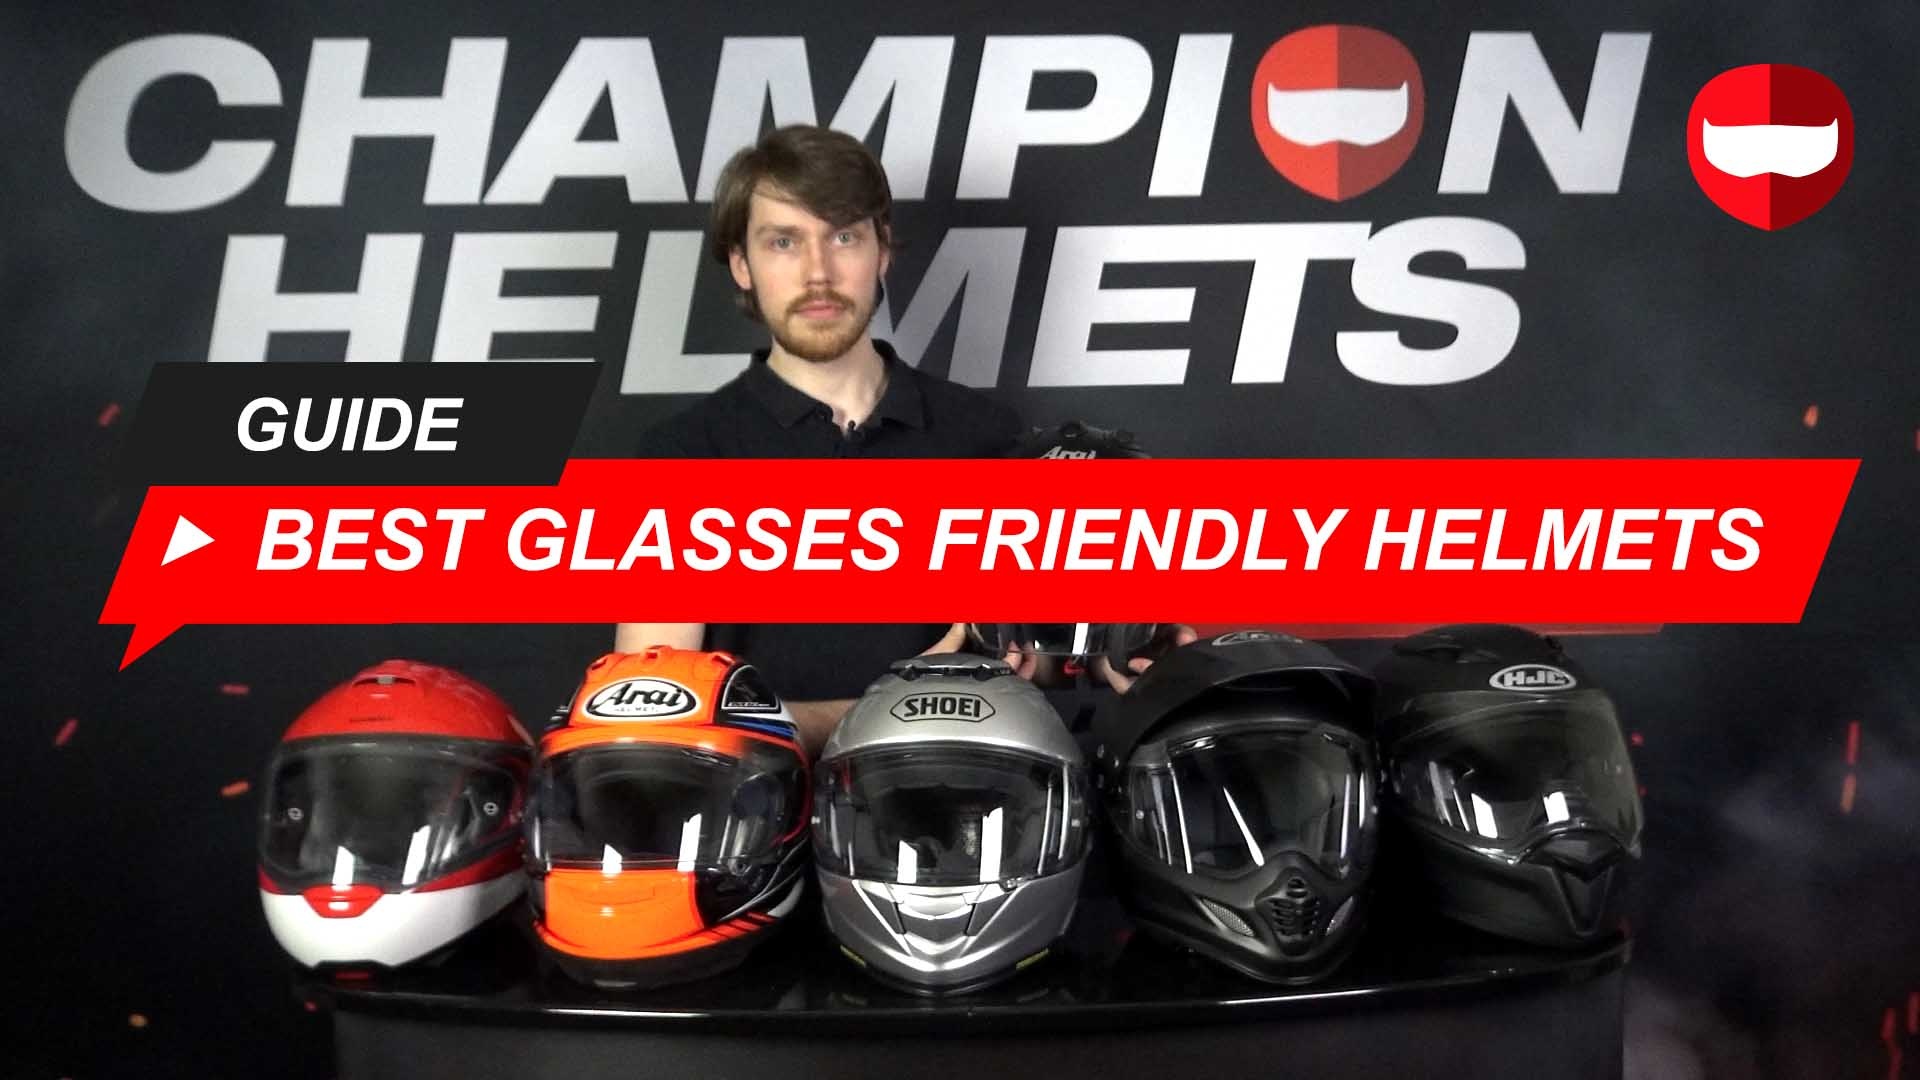 Best Glasses Friendly Motorcycle Helmets 2020 Guide Video Champion Helmets Motorcycle Gear